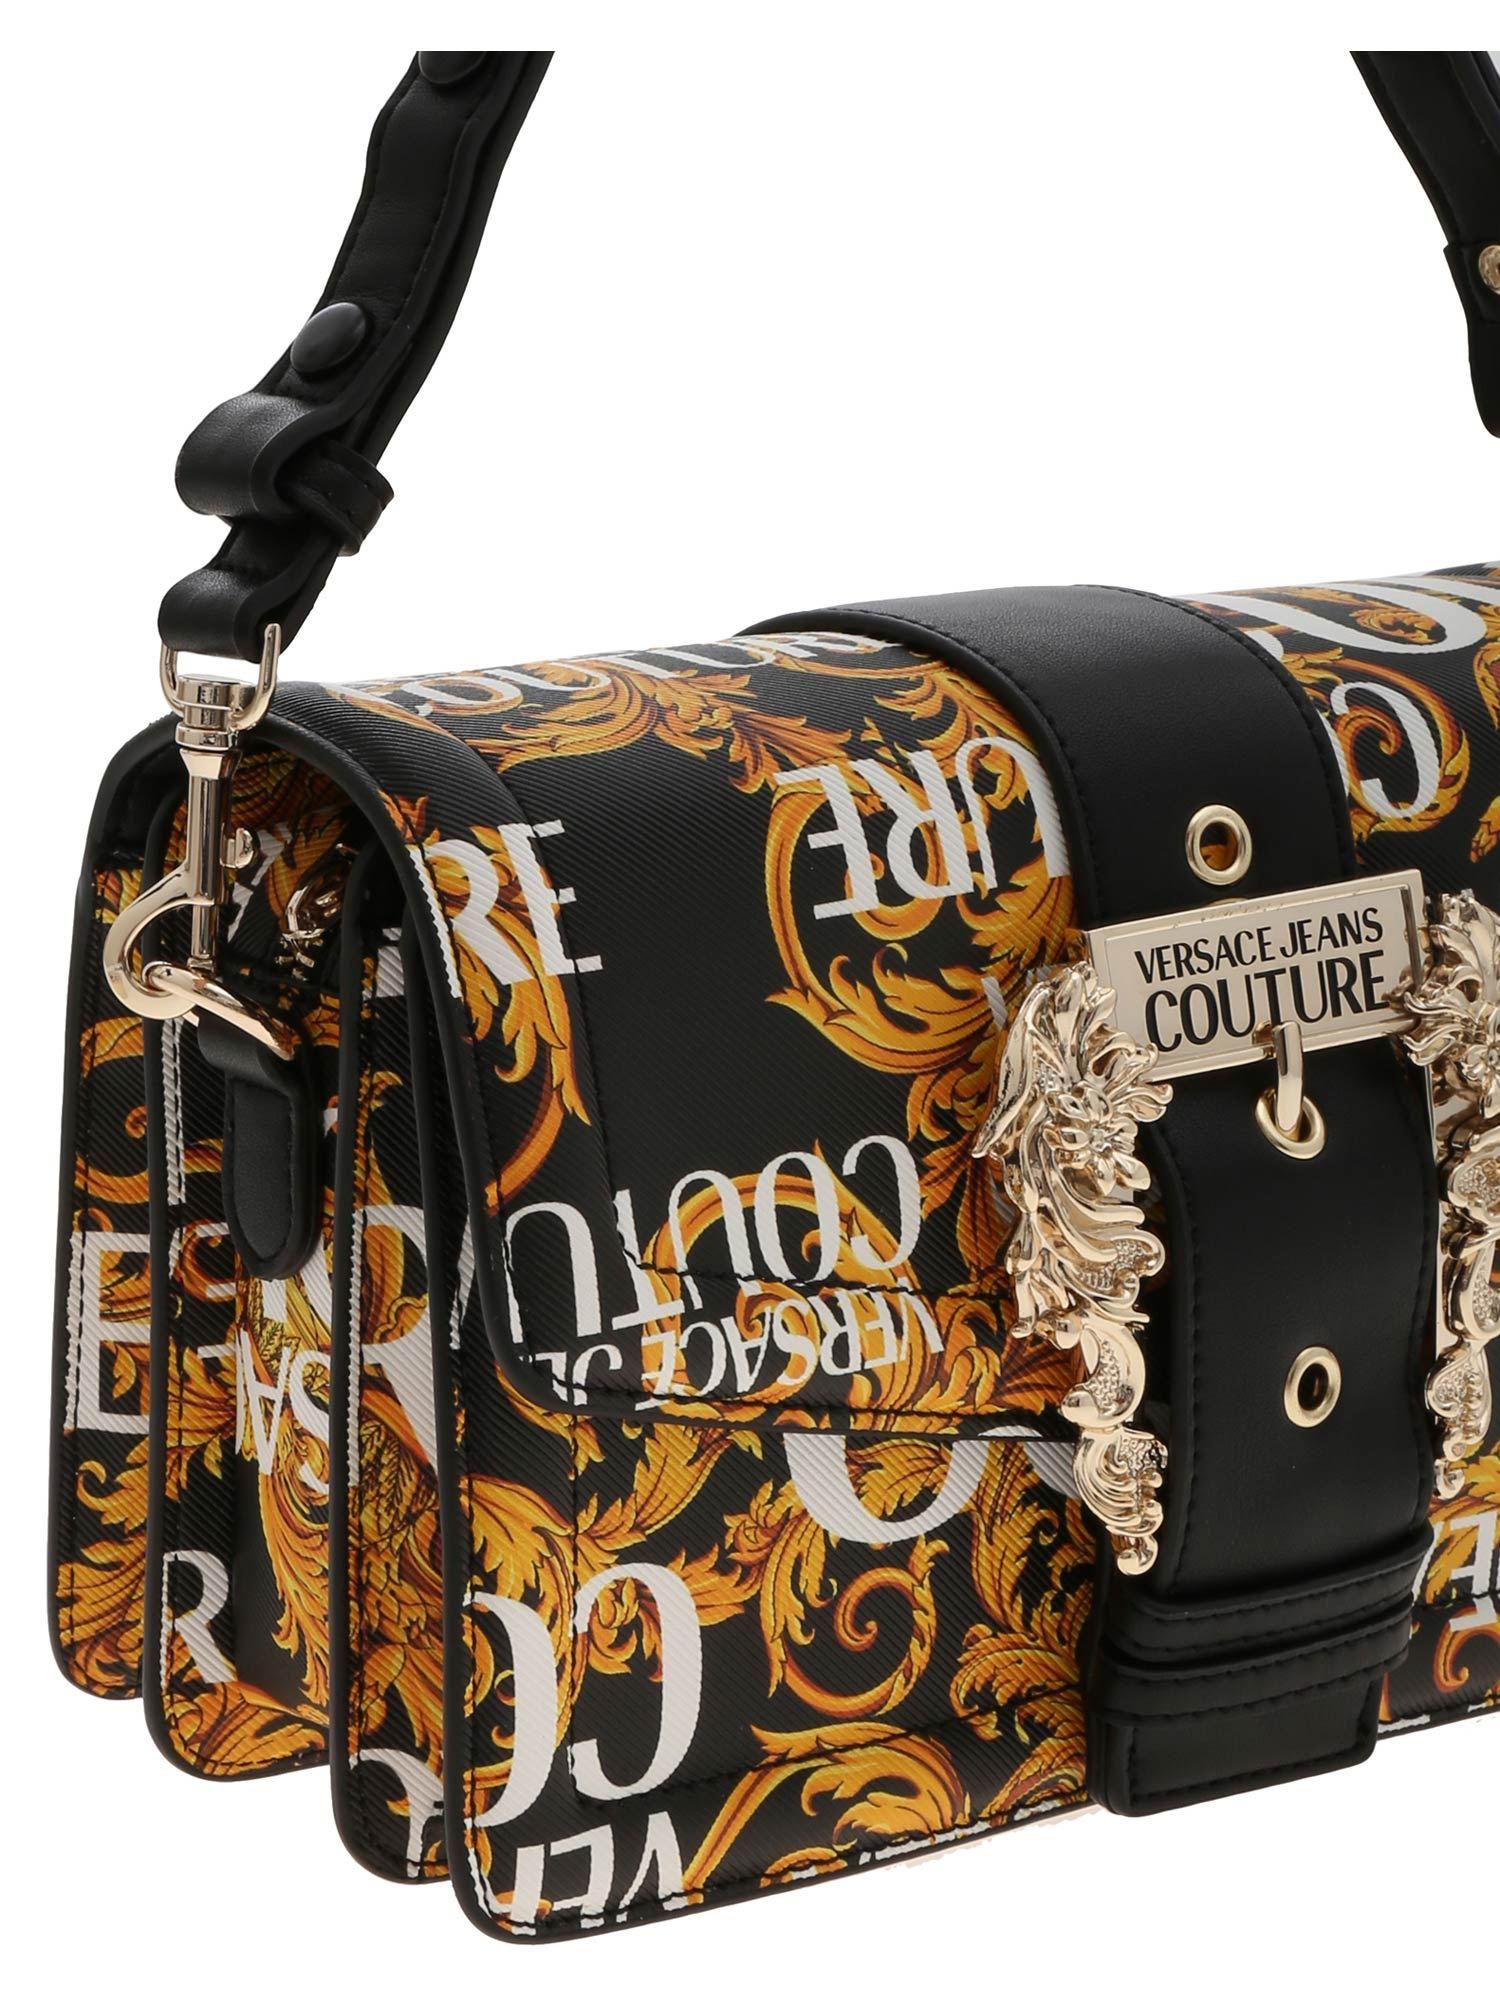 versace jeans couture handbags